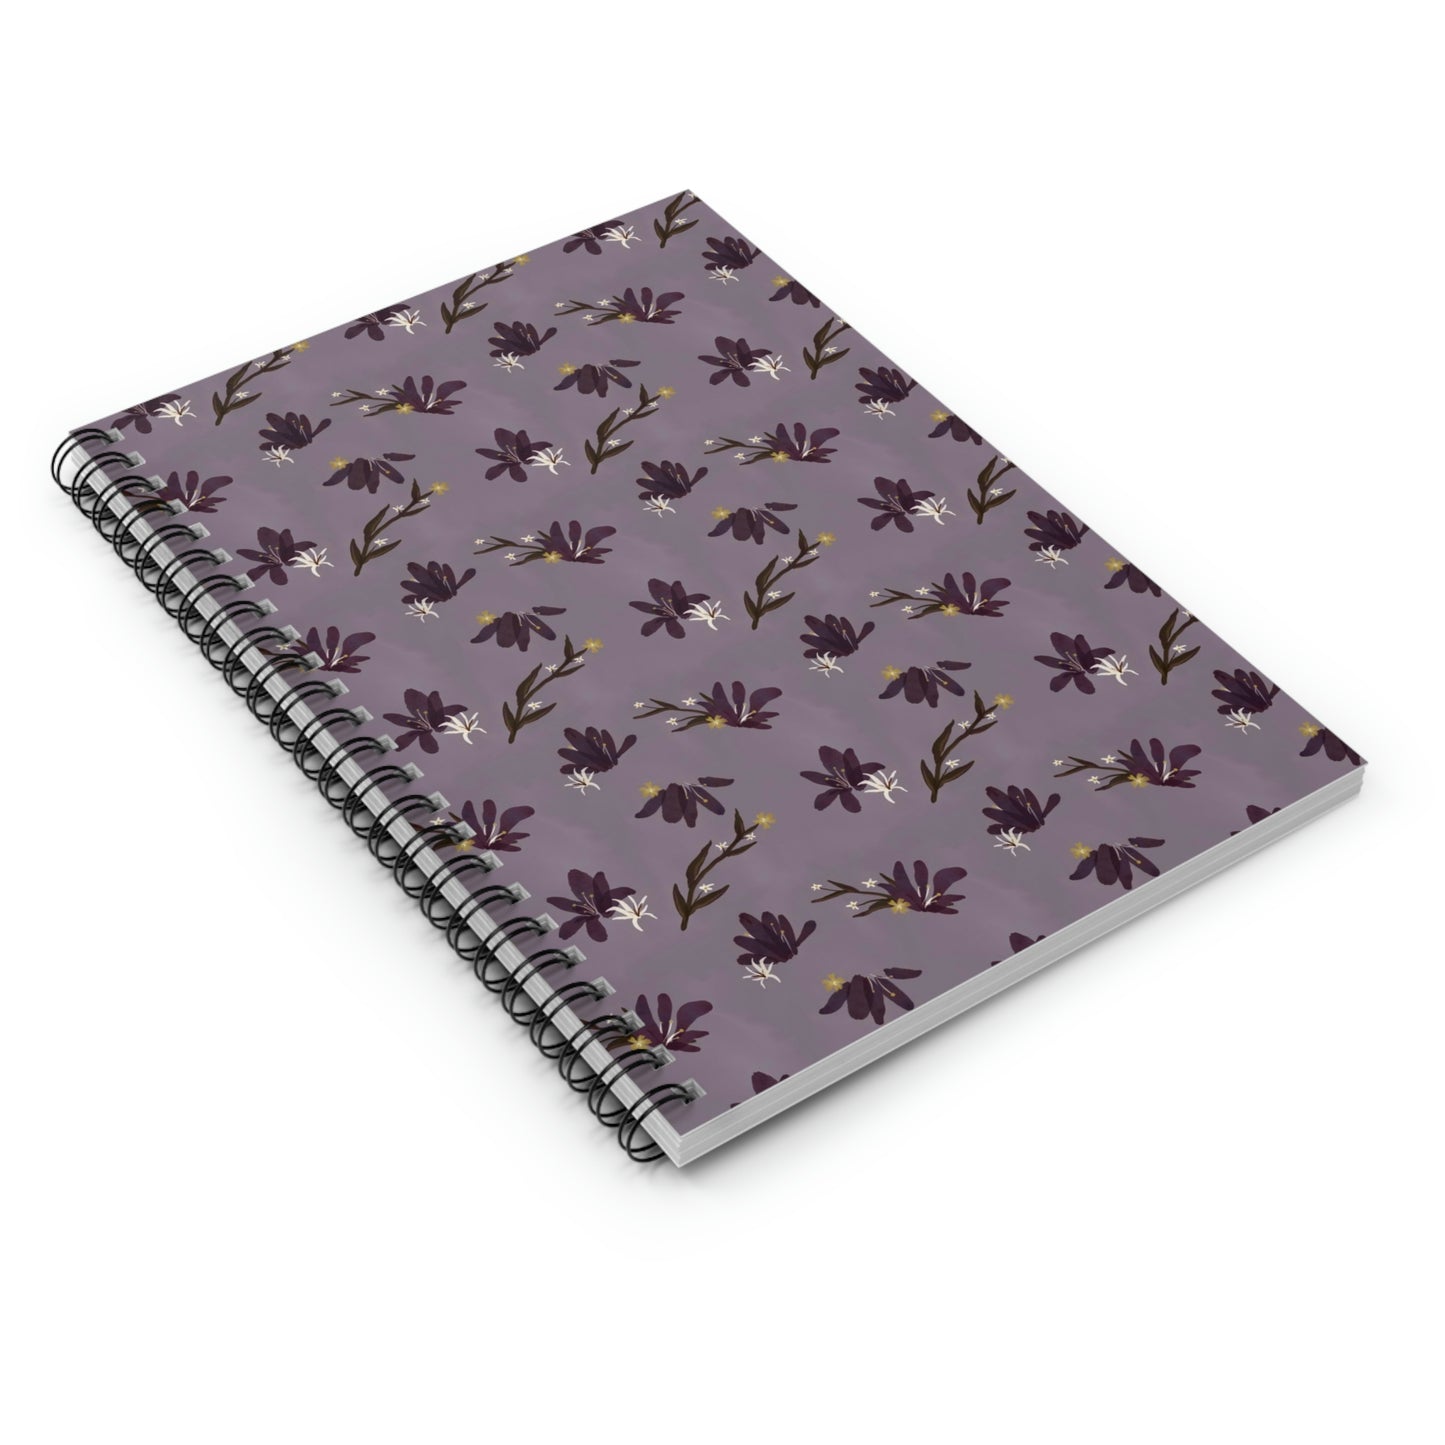 Purple Floral Spiral Notebook - Ruled Line